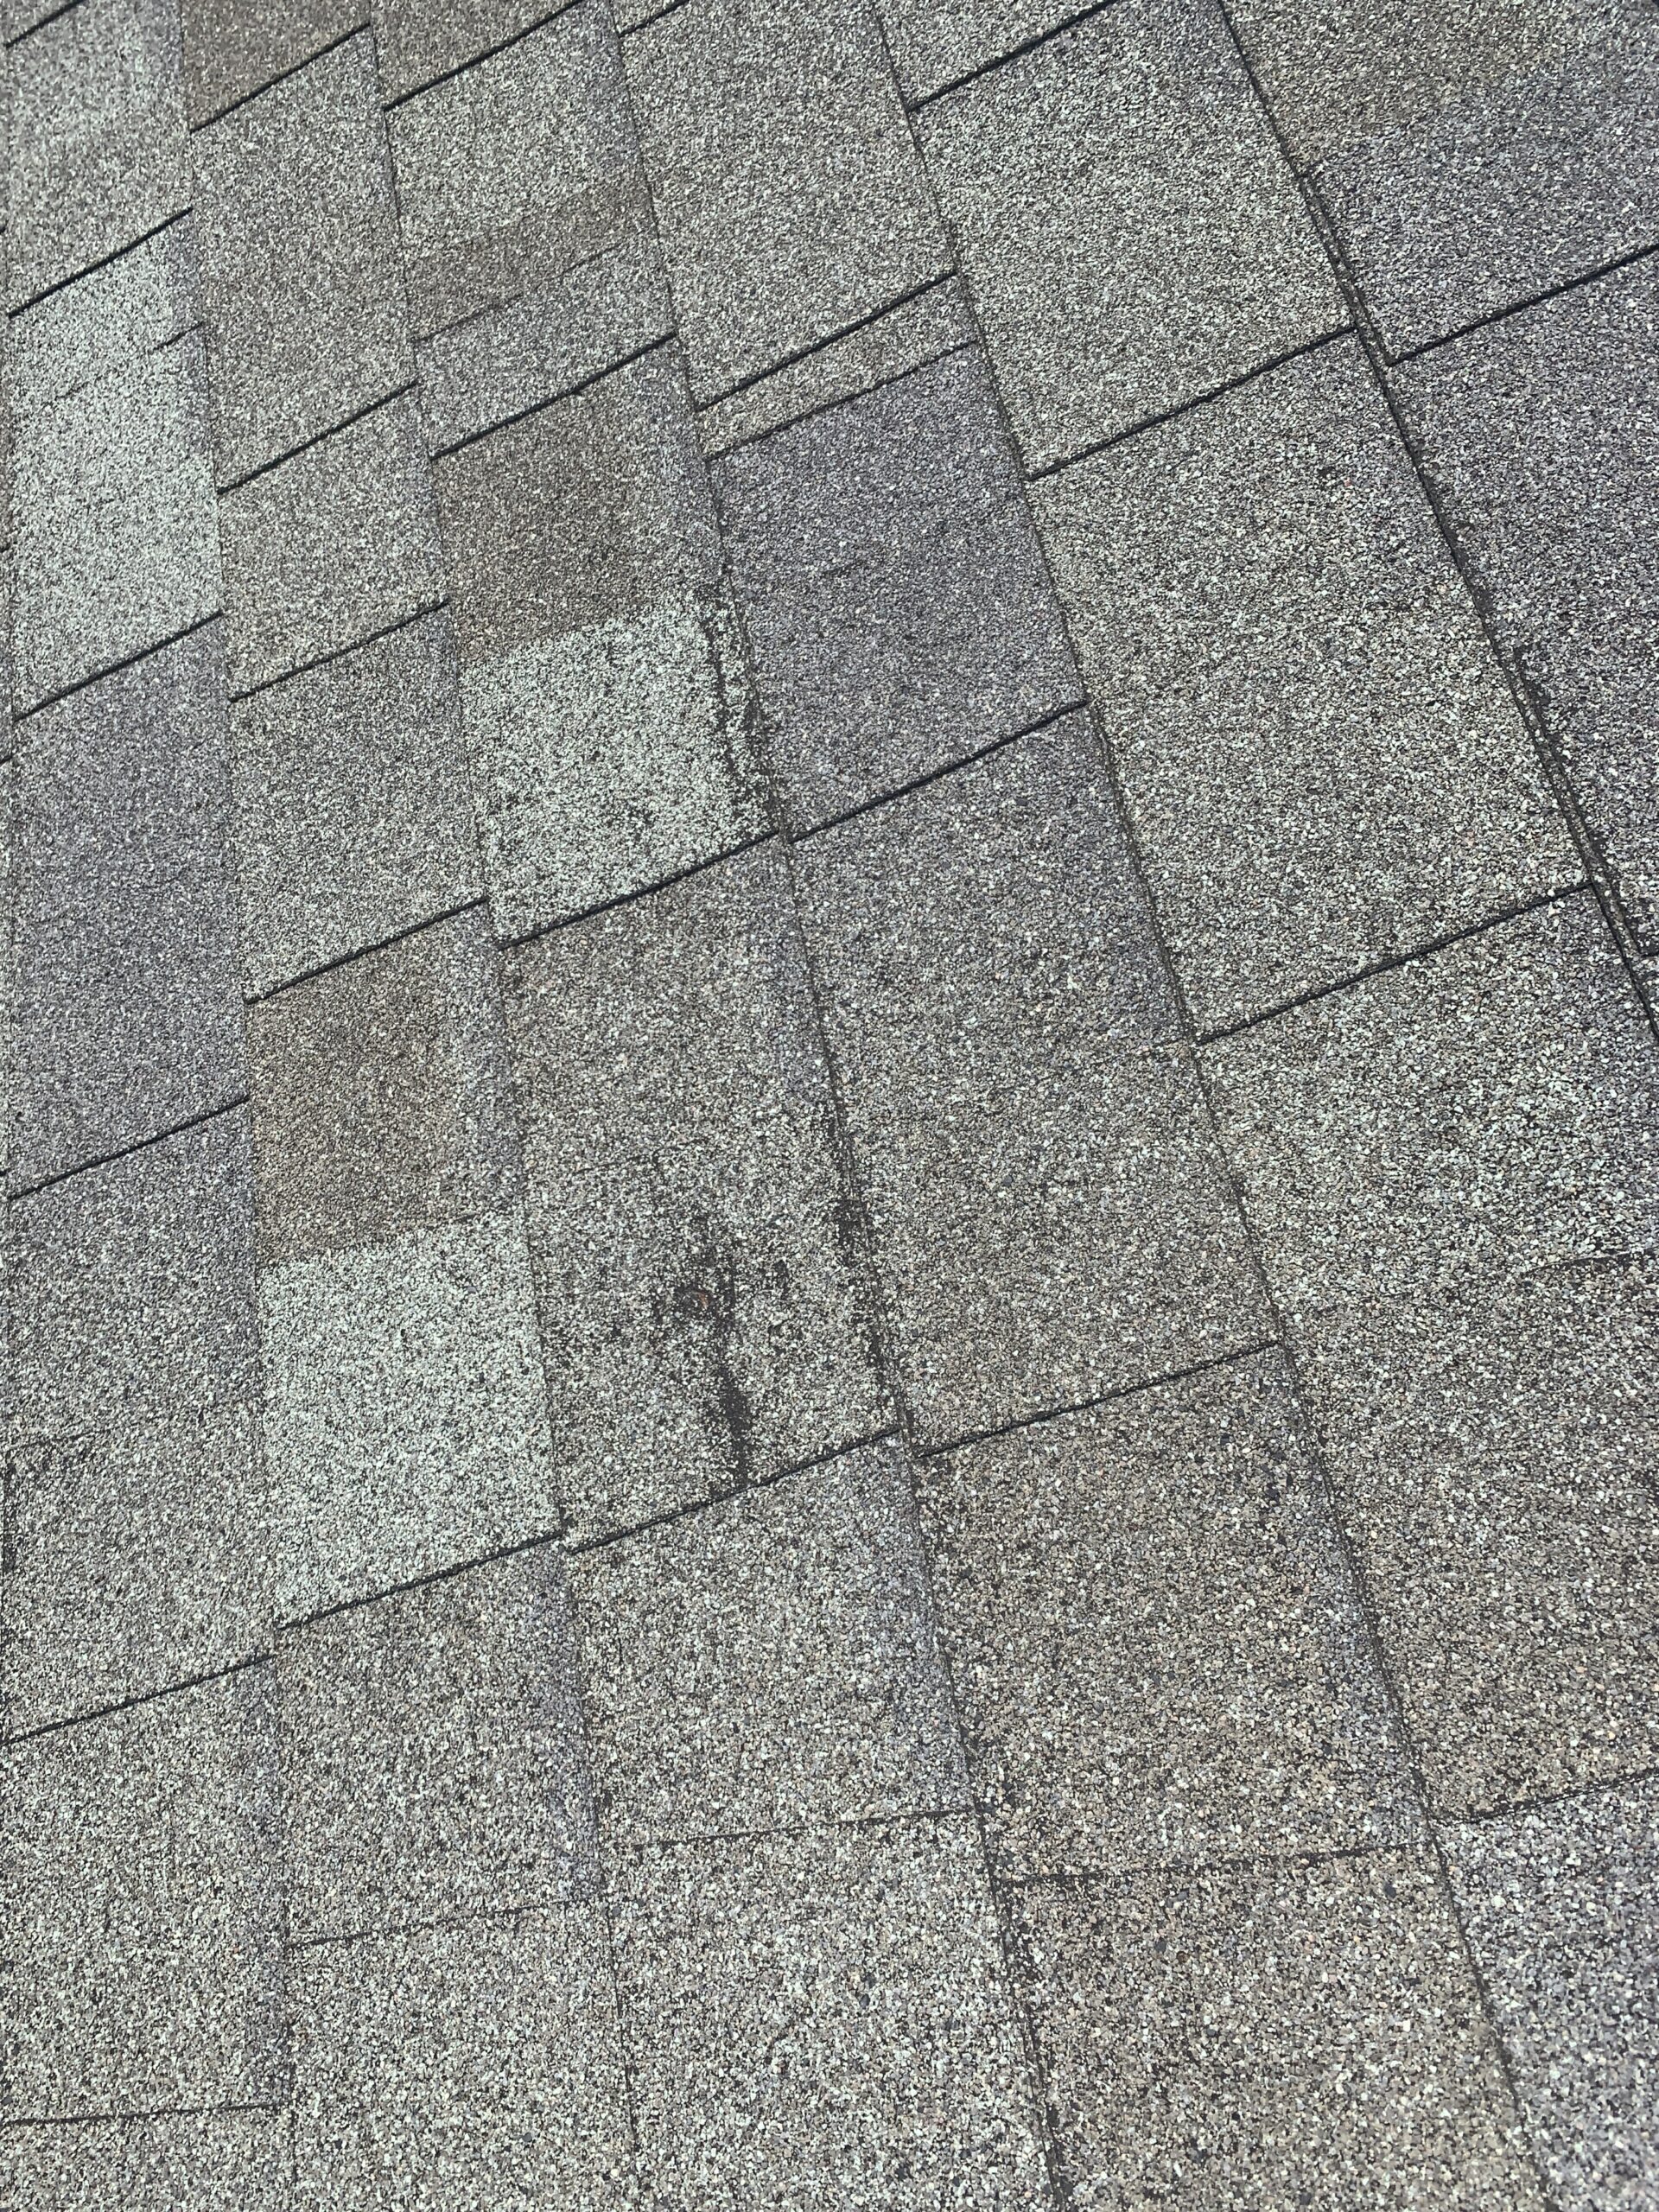 damaged creased shingles 